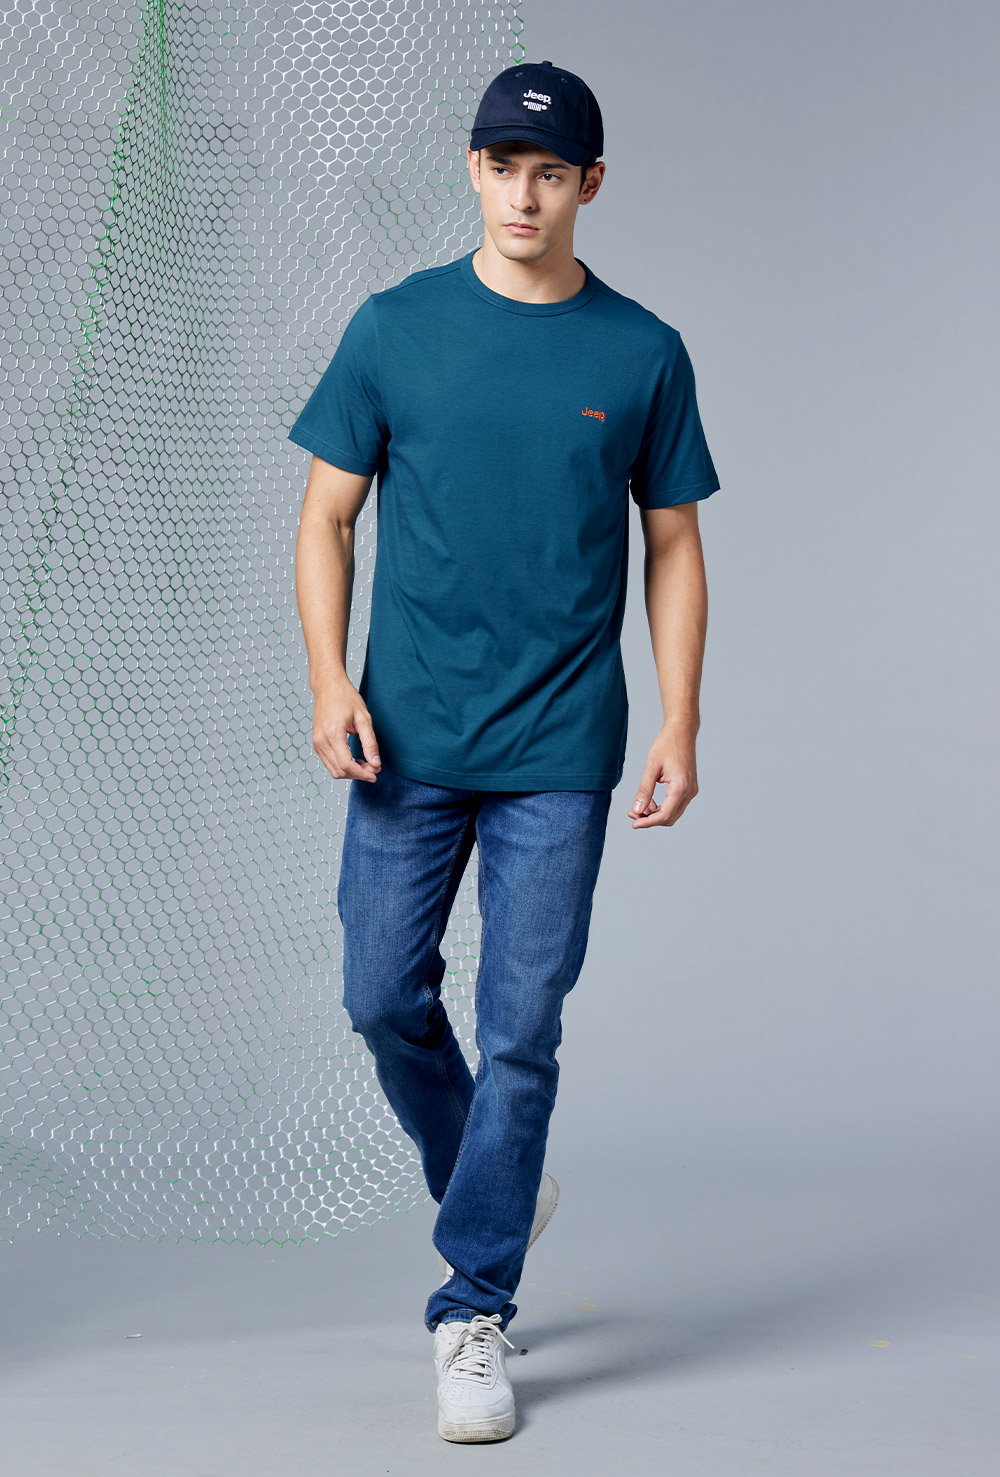 JEEP 男裝 經典素面LOGO短袖T恤(藍綠色)評價推薦